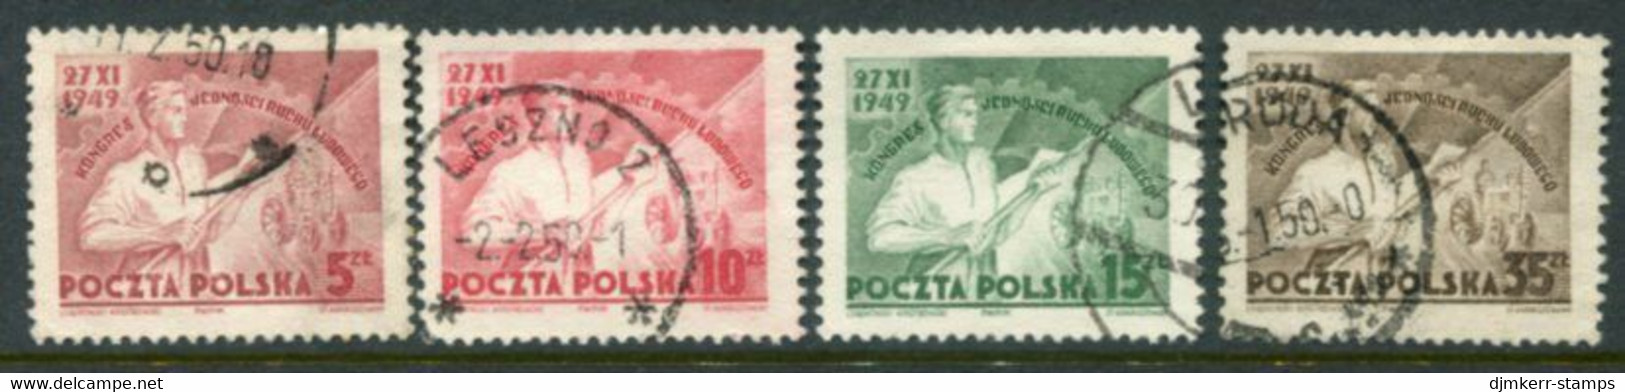 POLAND 1949  Peasant Movement Congress. Used.  Michel 539-42 - Usados